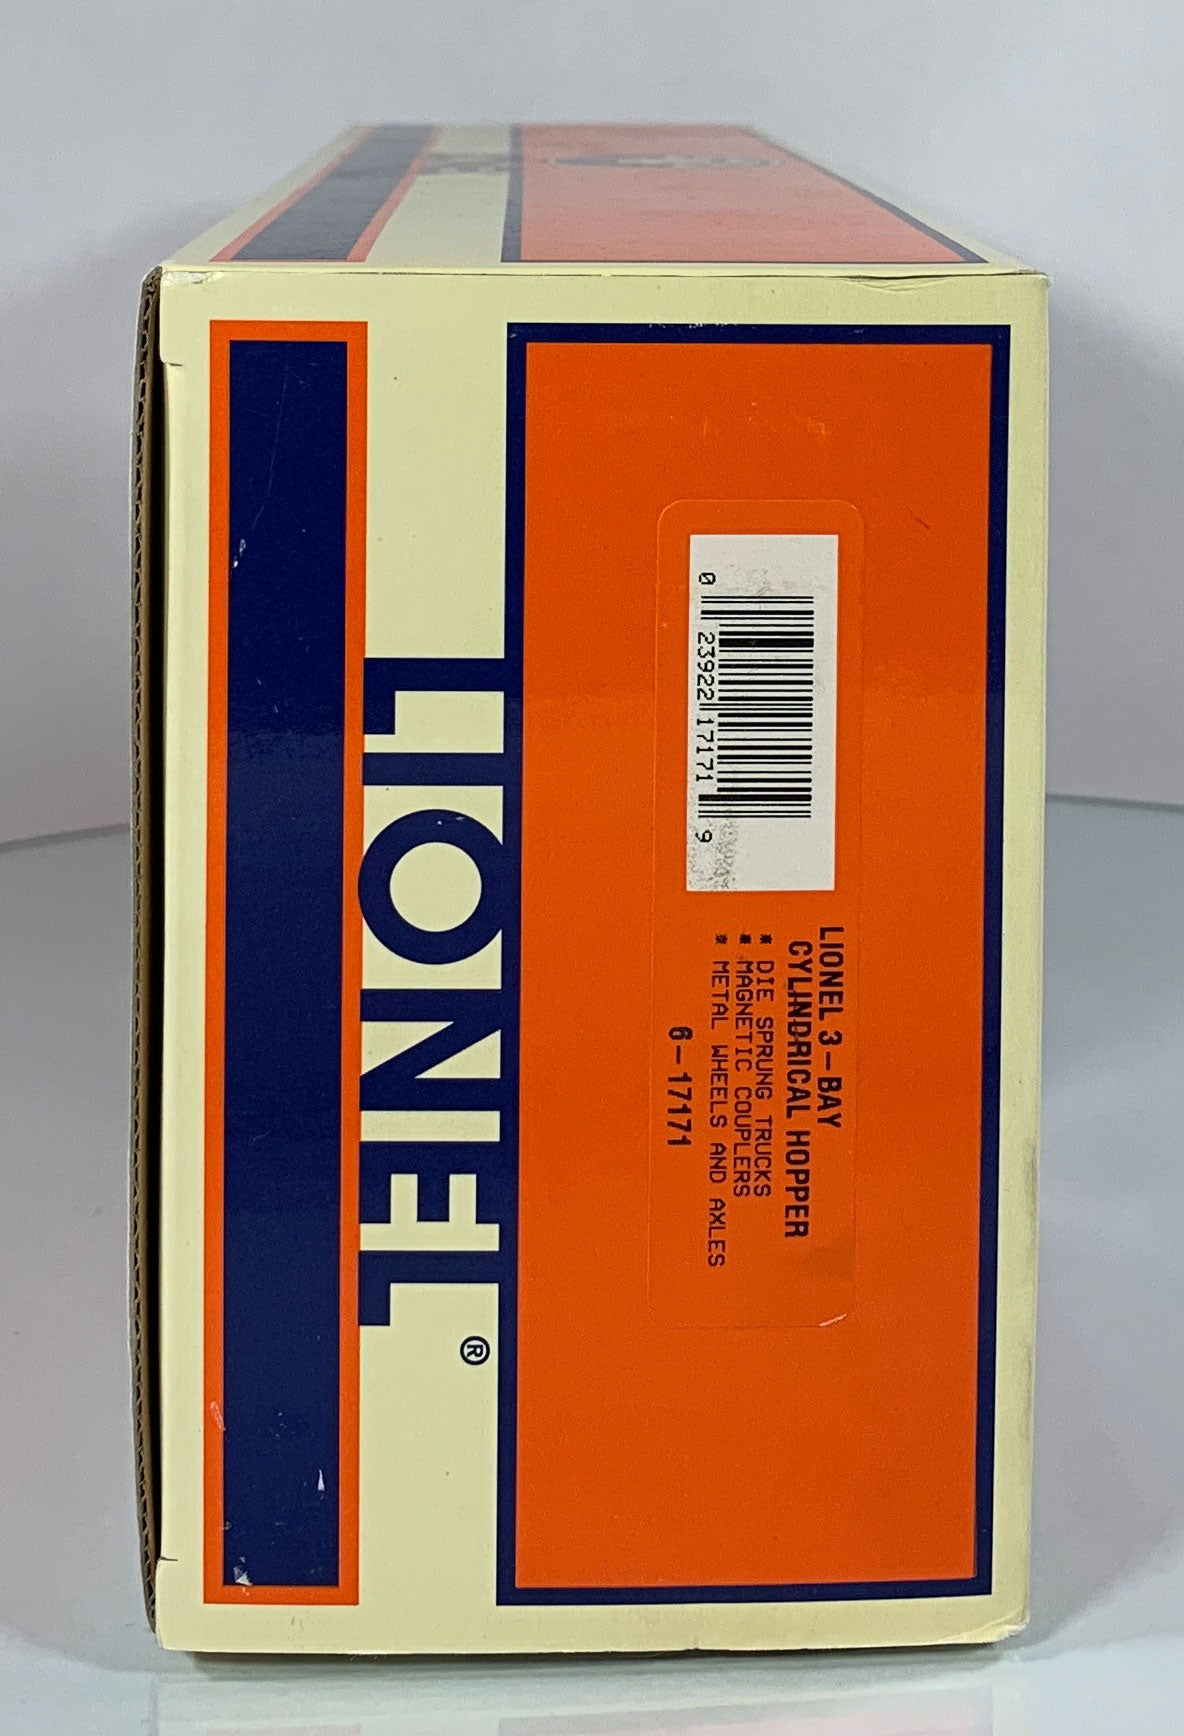 LIONEL • O GAUGE • 2001 Lionel 3-Bay Cylindrical Hopper 6-17171 • NEW OLD STOCK